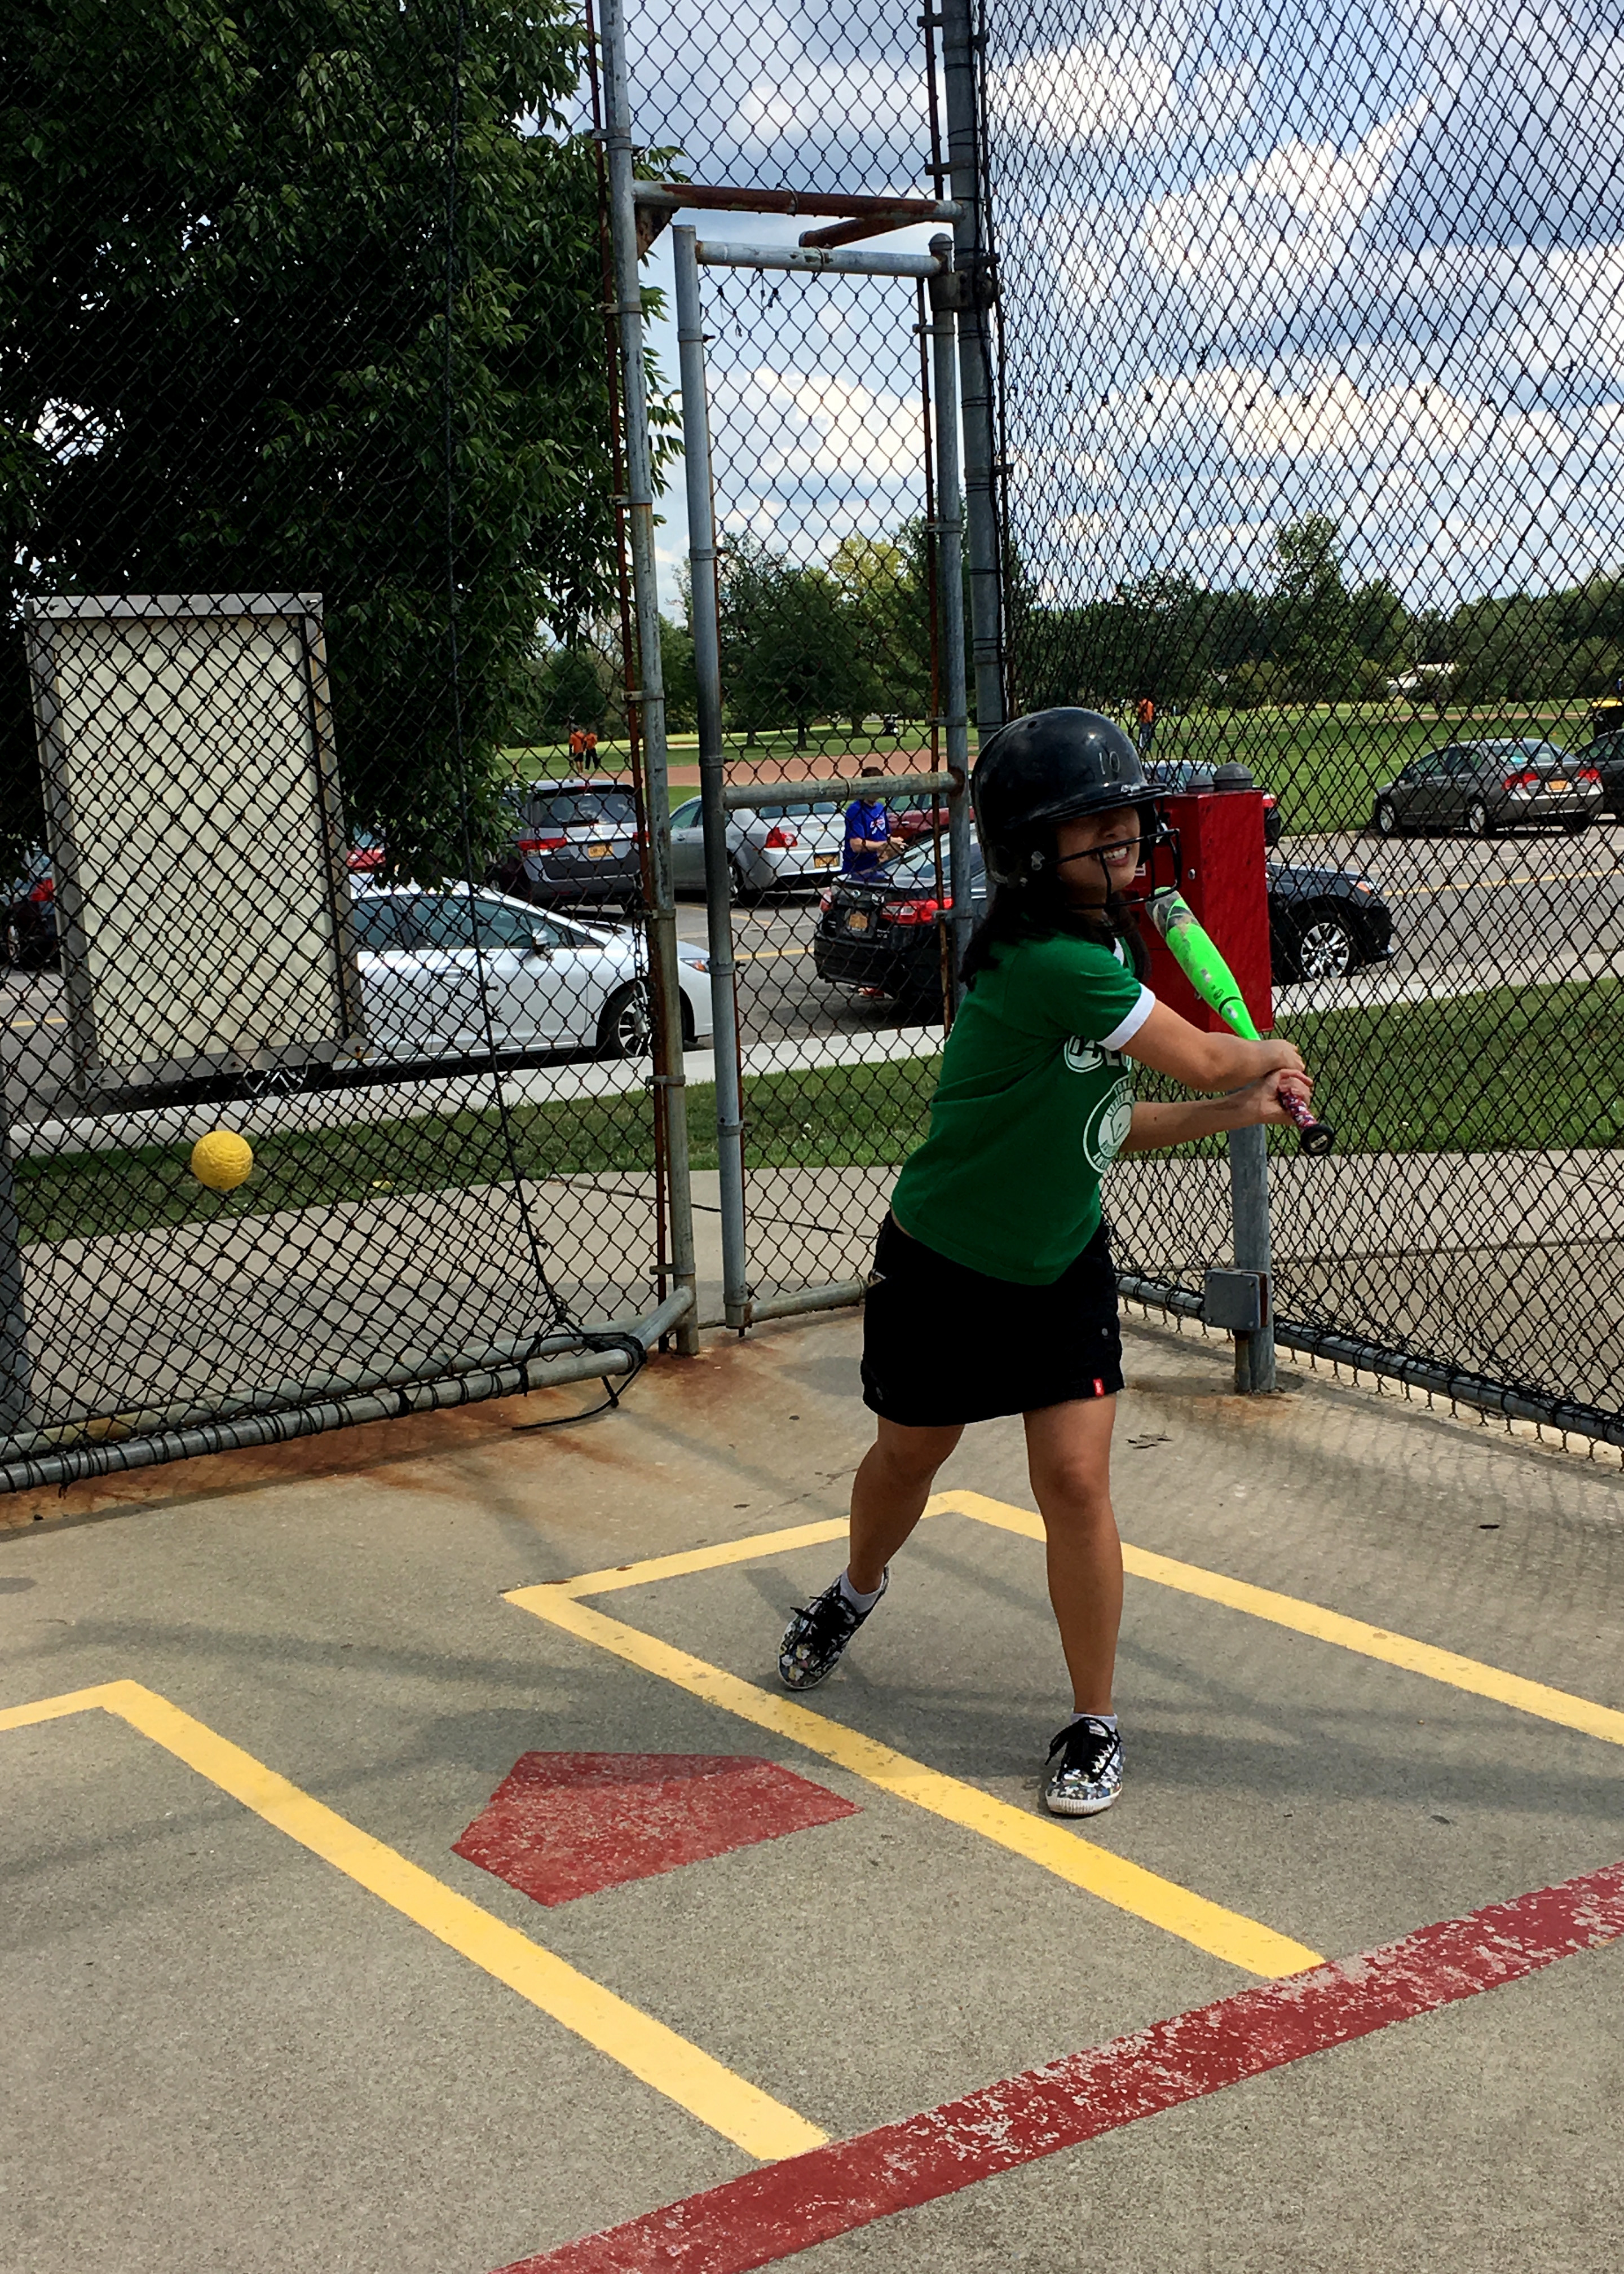 batting at brighton park batting cages